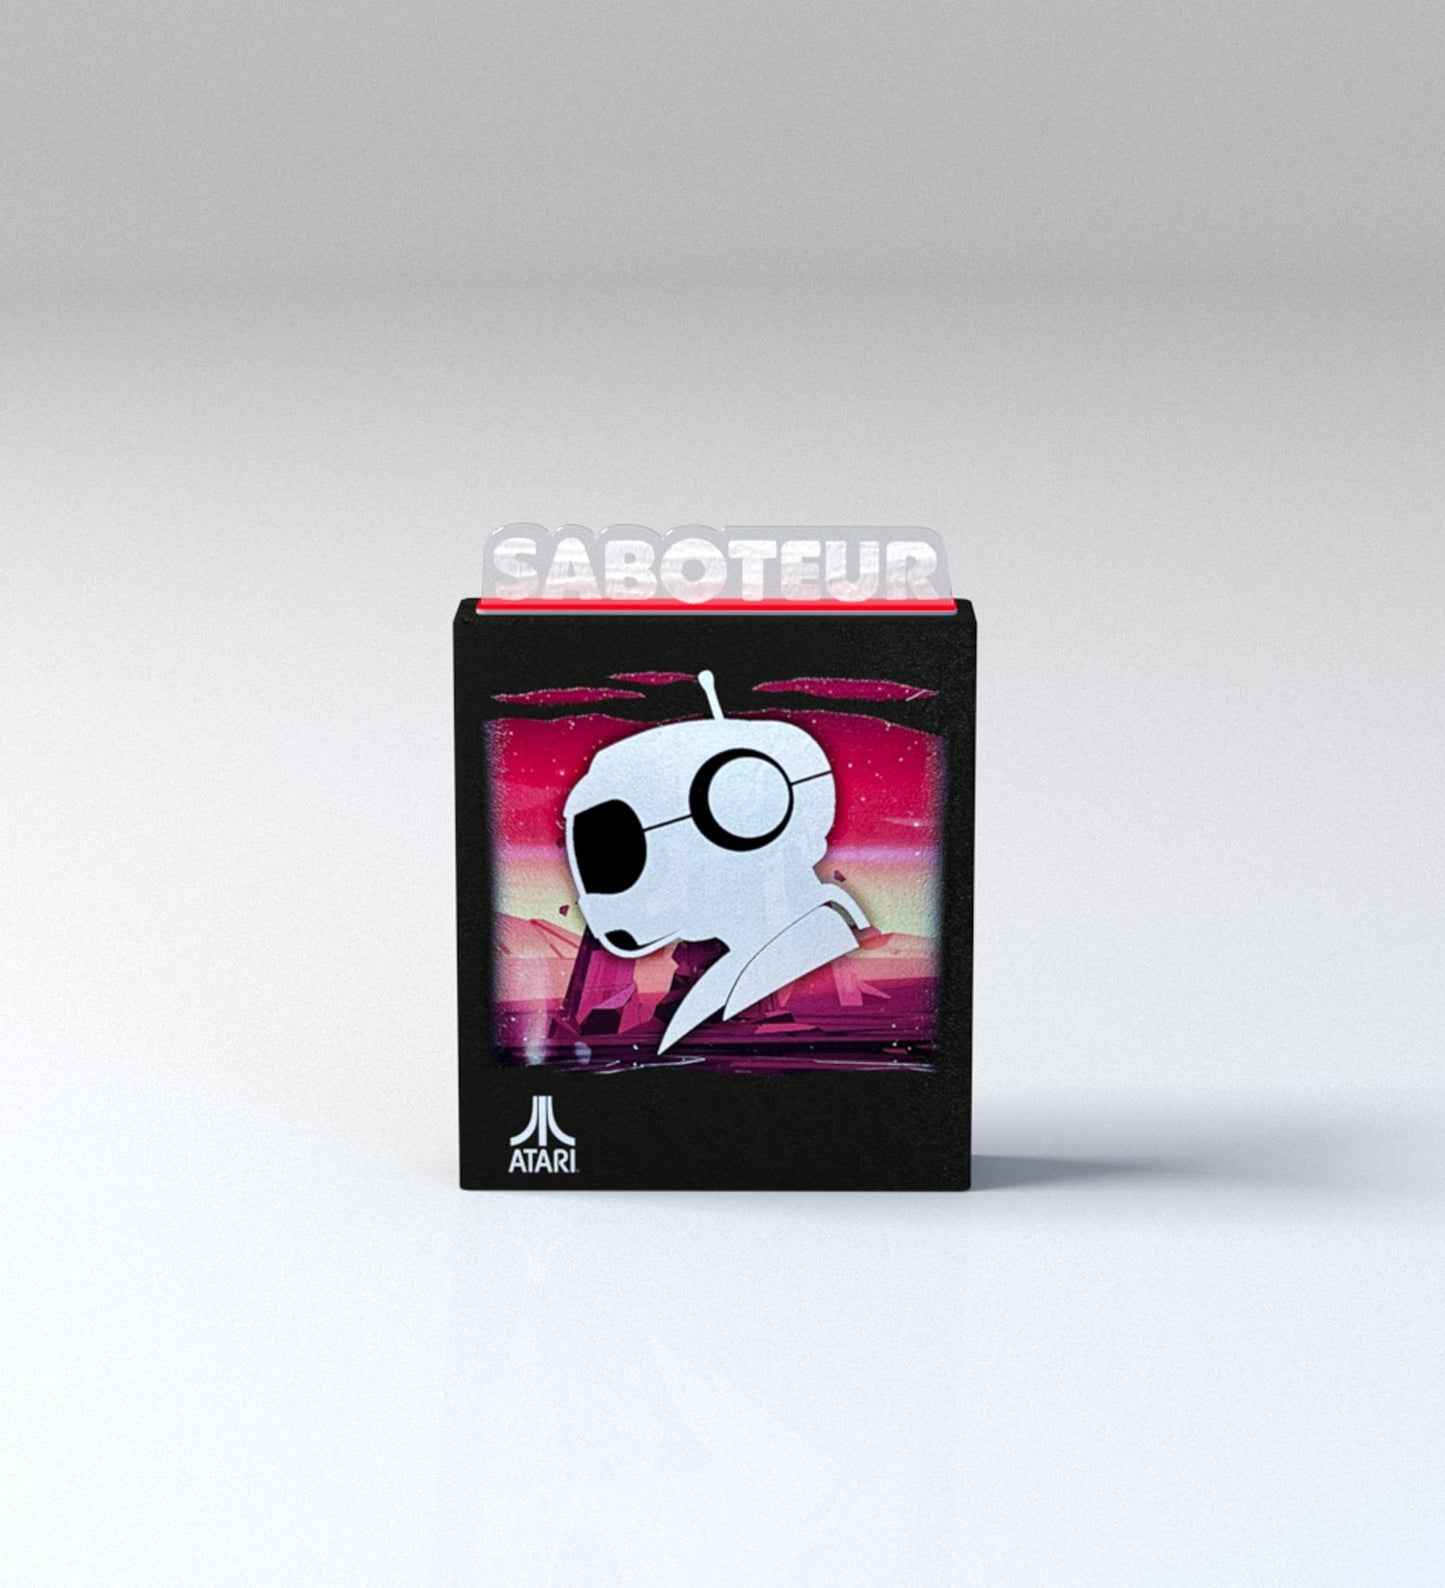 Saboteur - Limited Edition